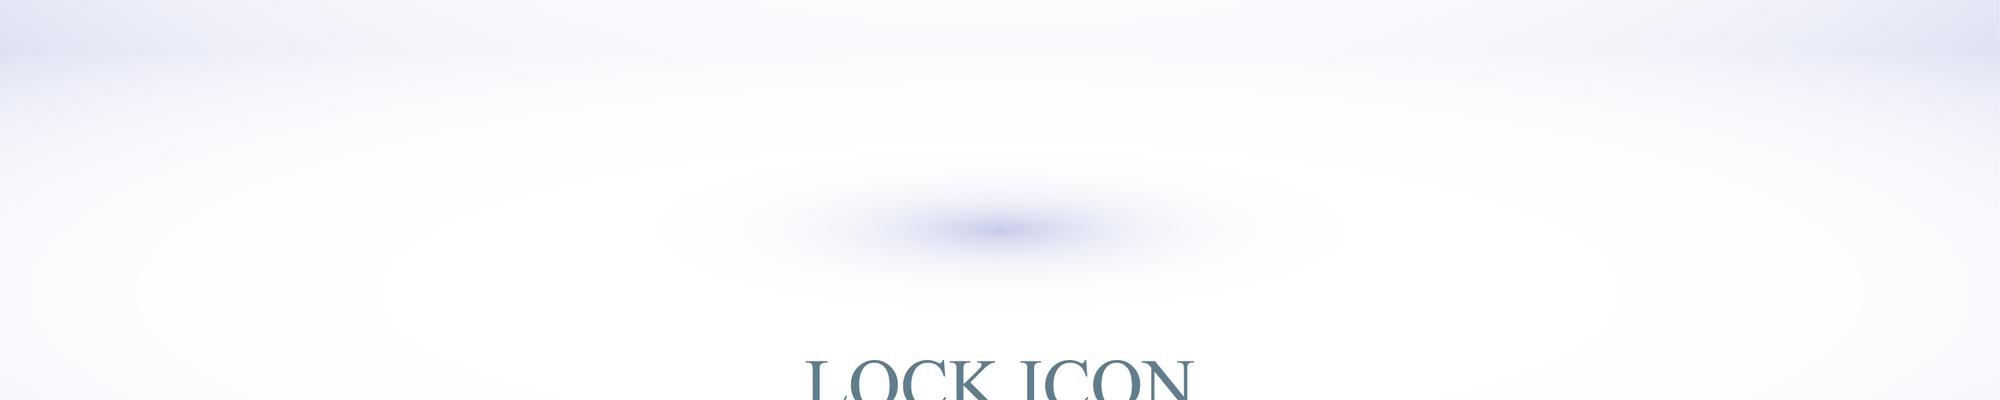 Flat.Icon portföy kapağı imajı